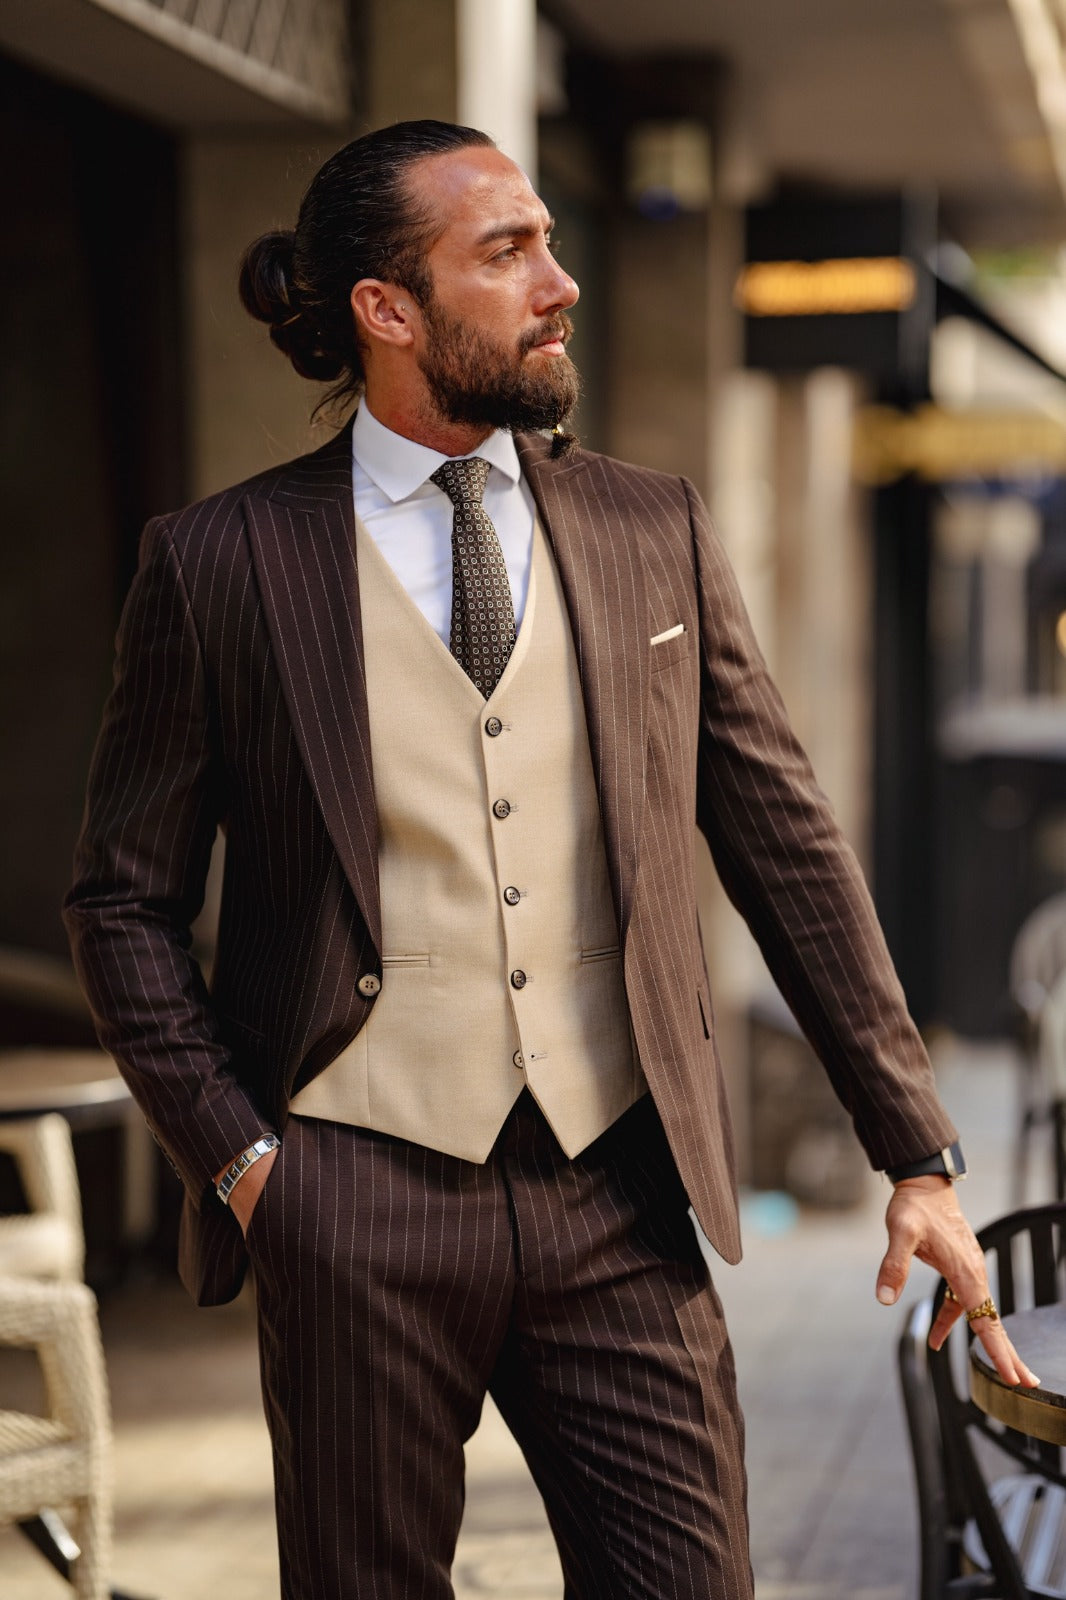 Brown Silk Pakistani Suit 268082